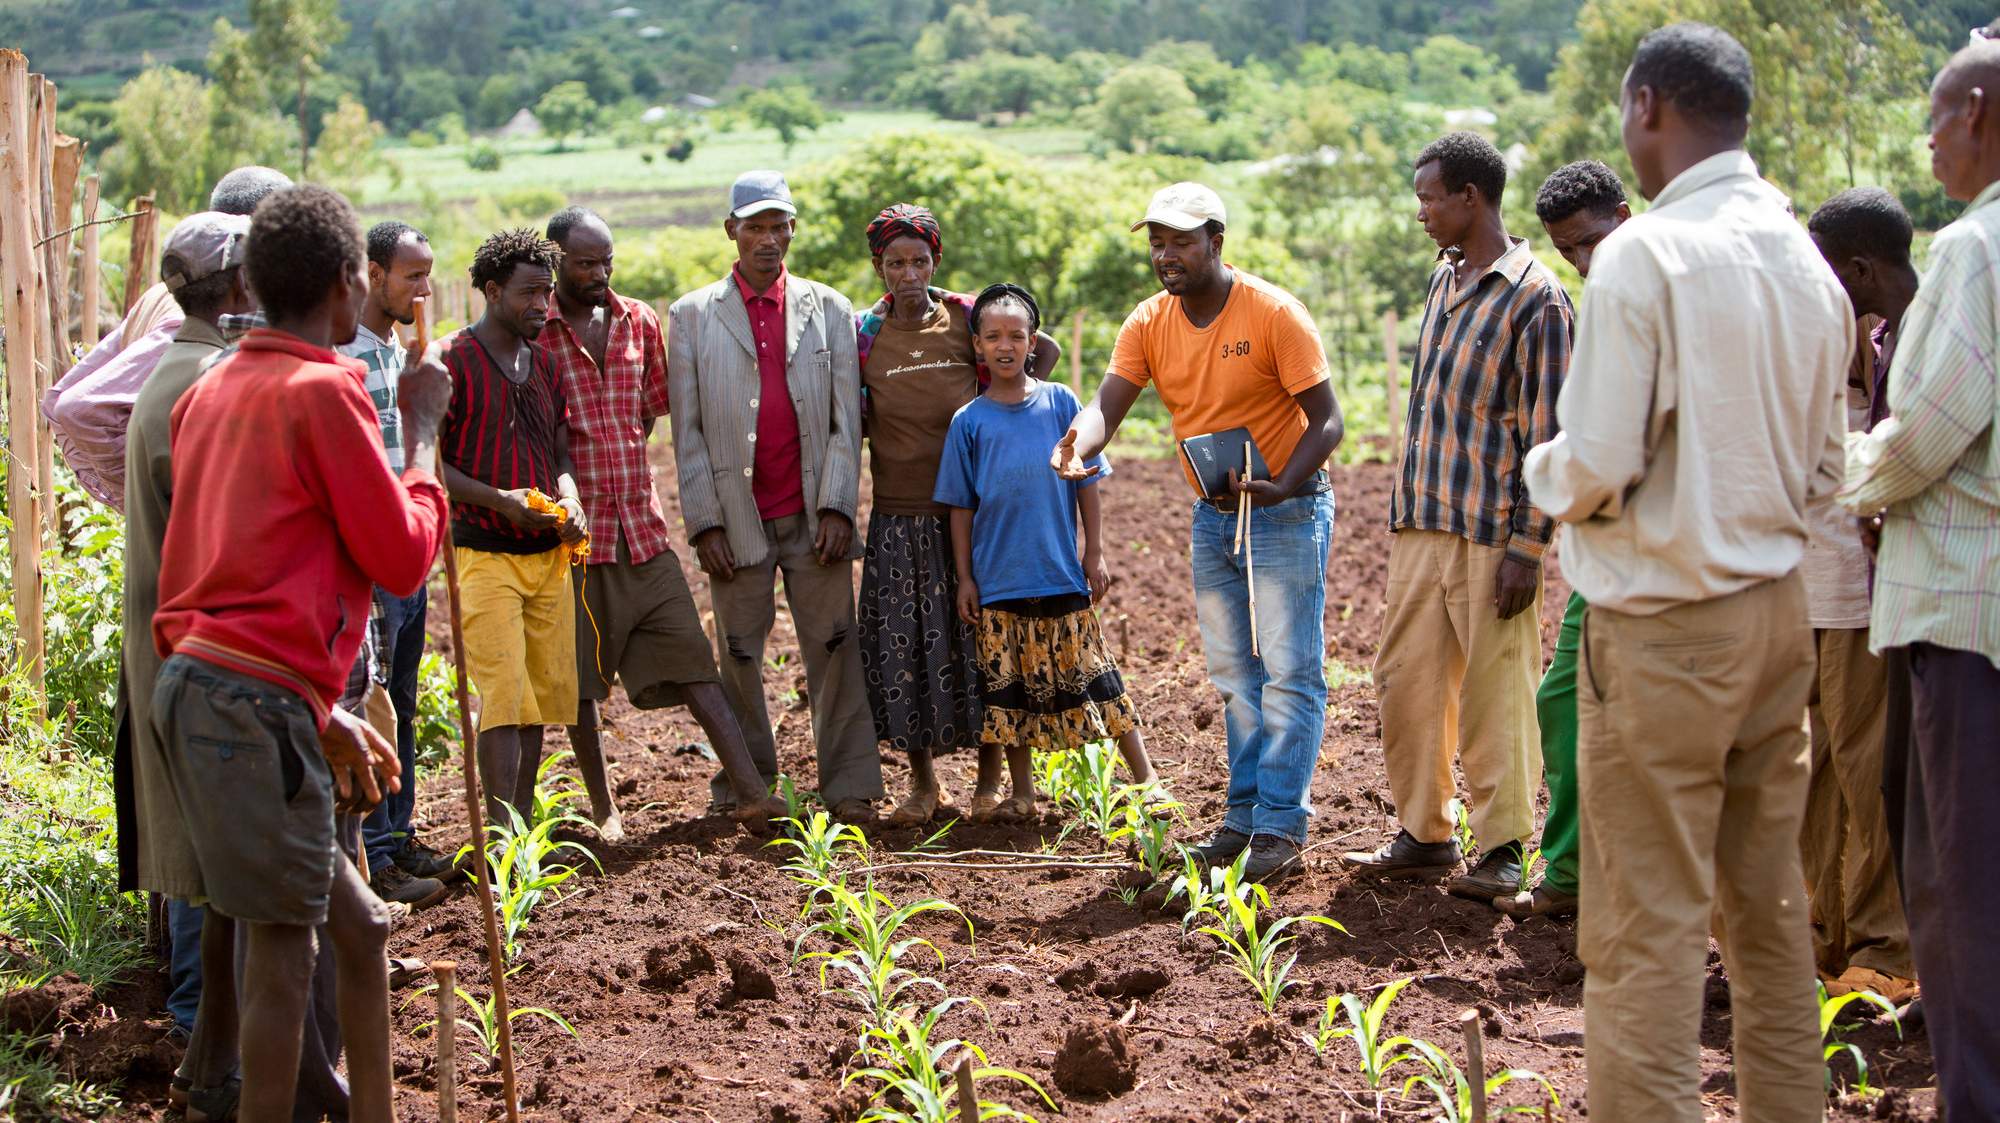 Nuru Ethiopia Farmer Households Are Better Off Than Non-Nuru Farmers